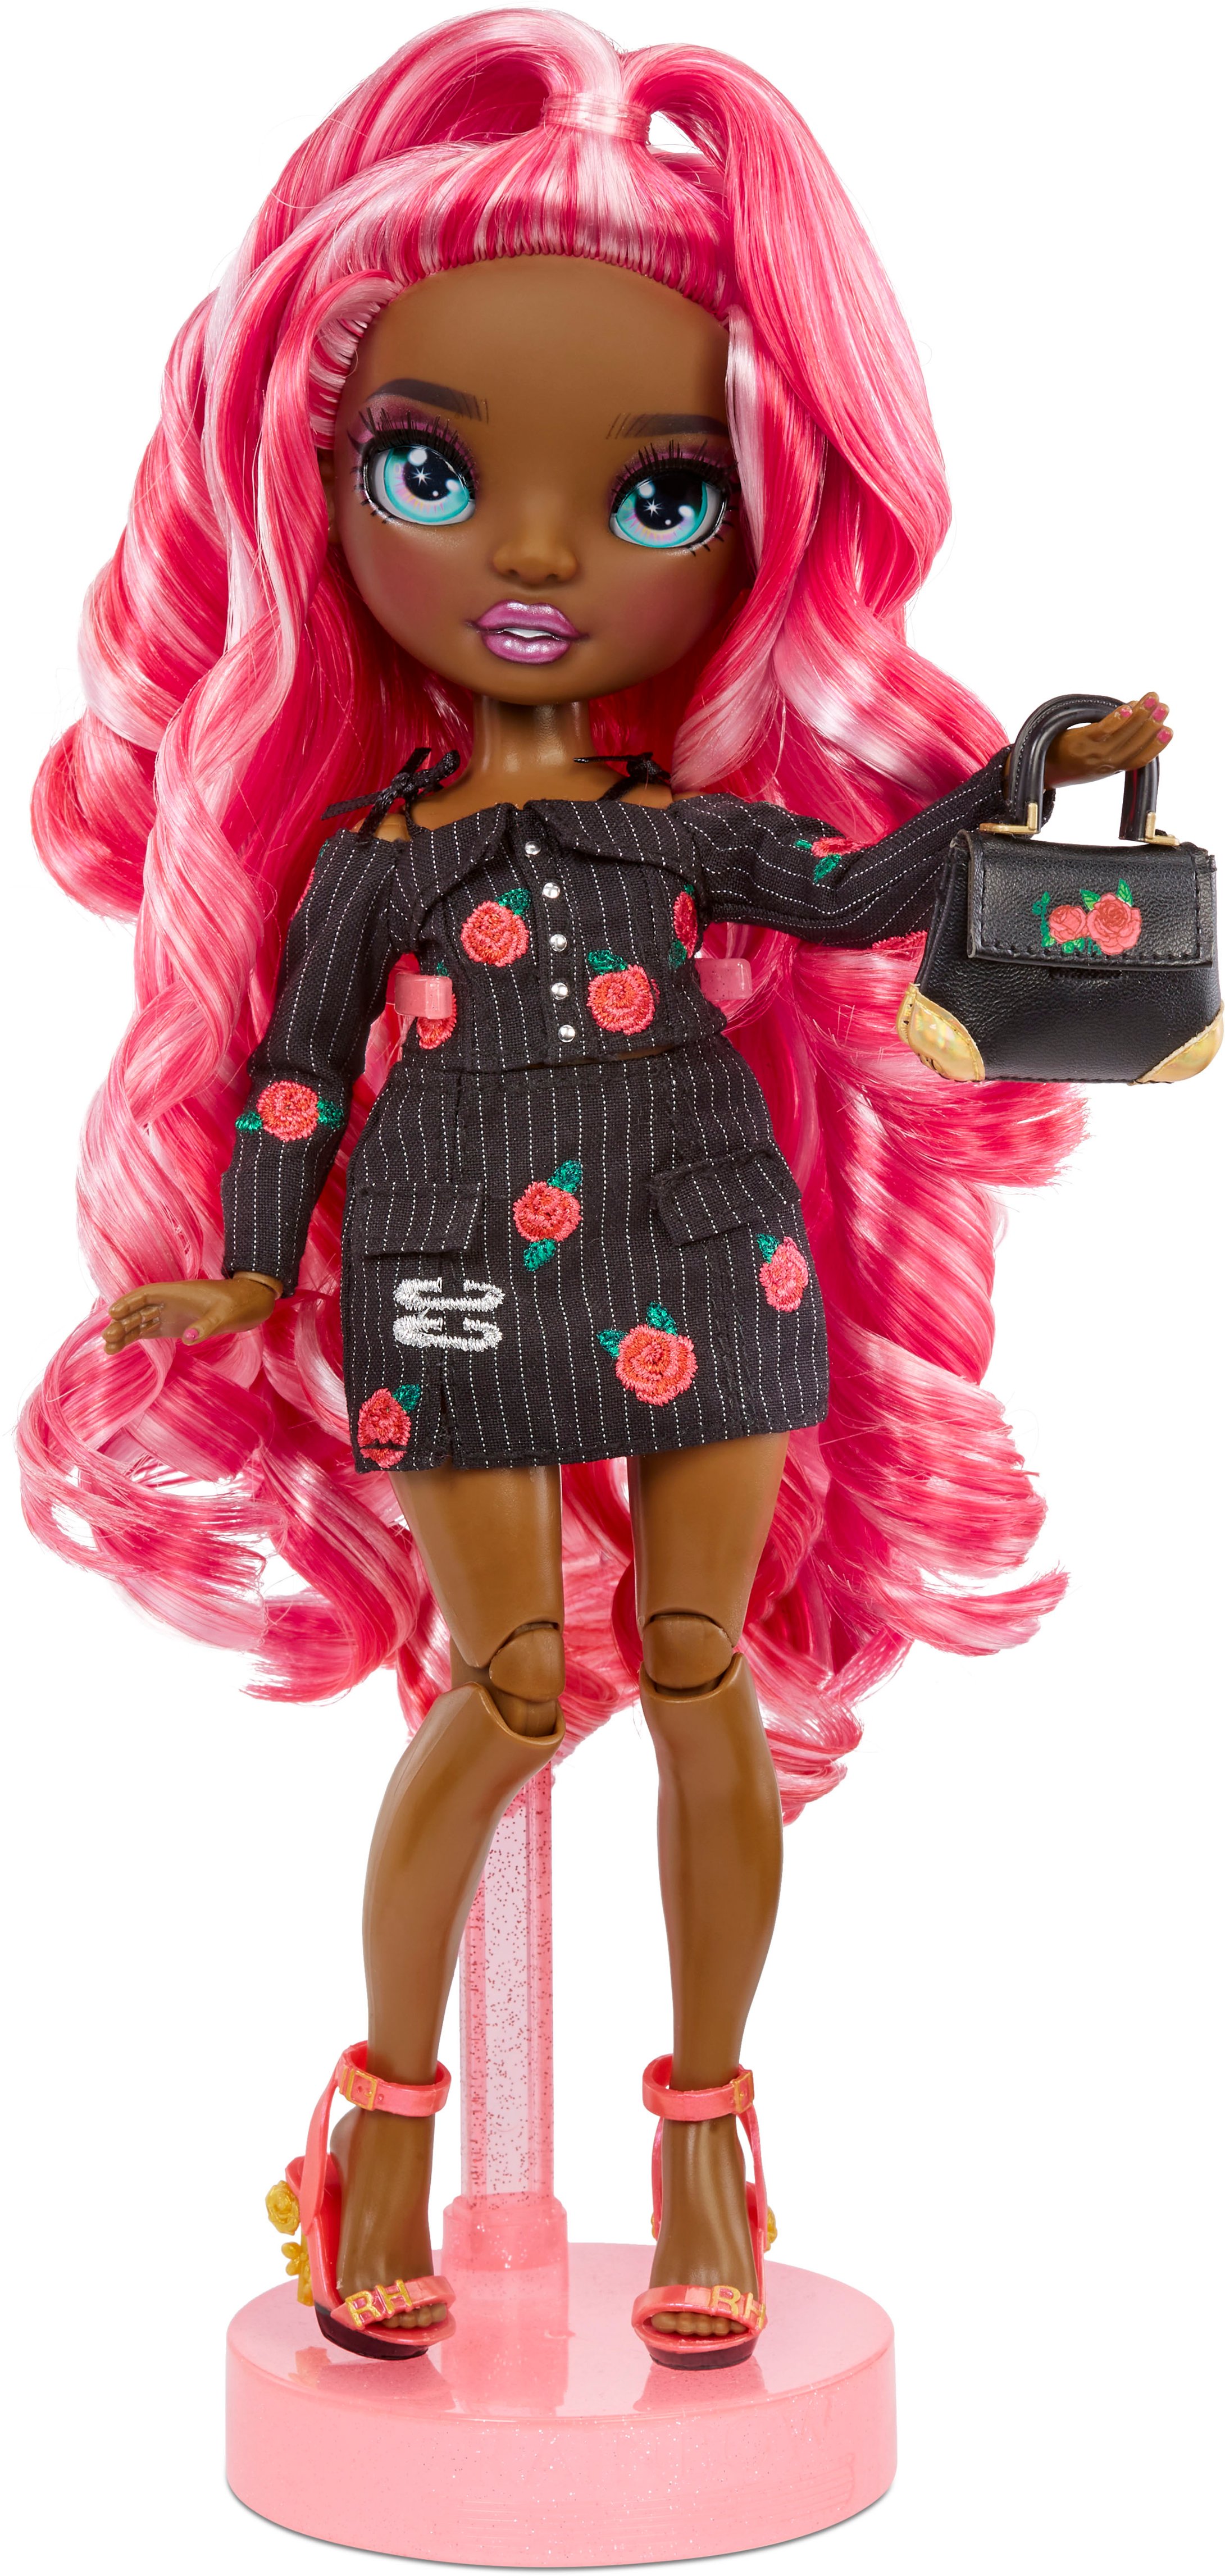 Left View: Rainbow High Fashion Doll- Daria Roselyn (Rose)